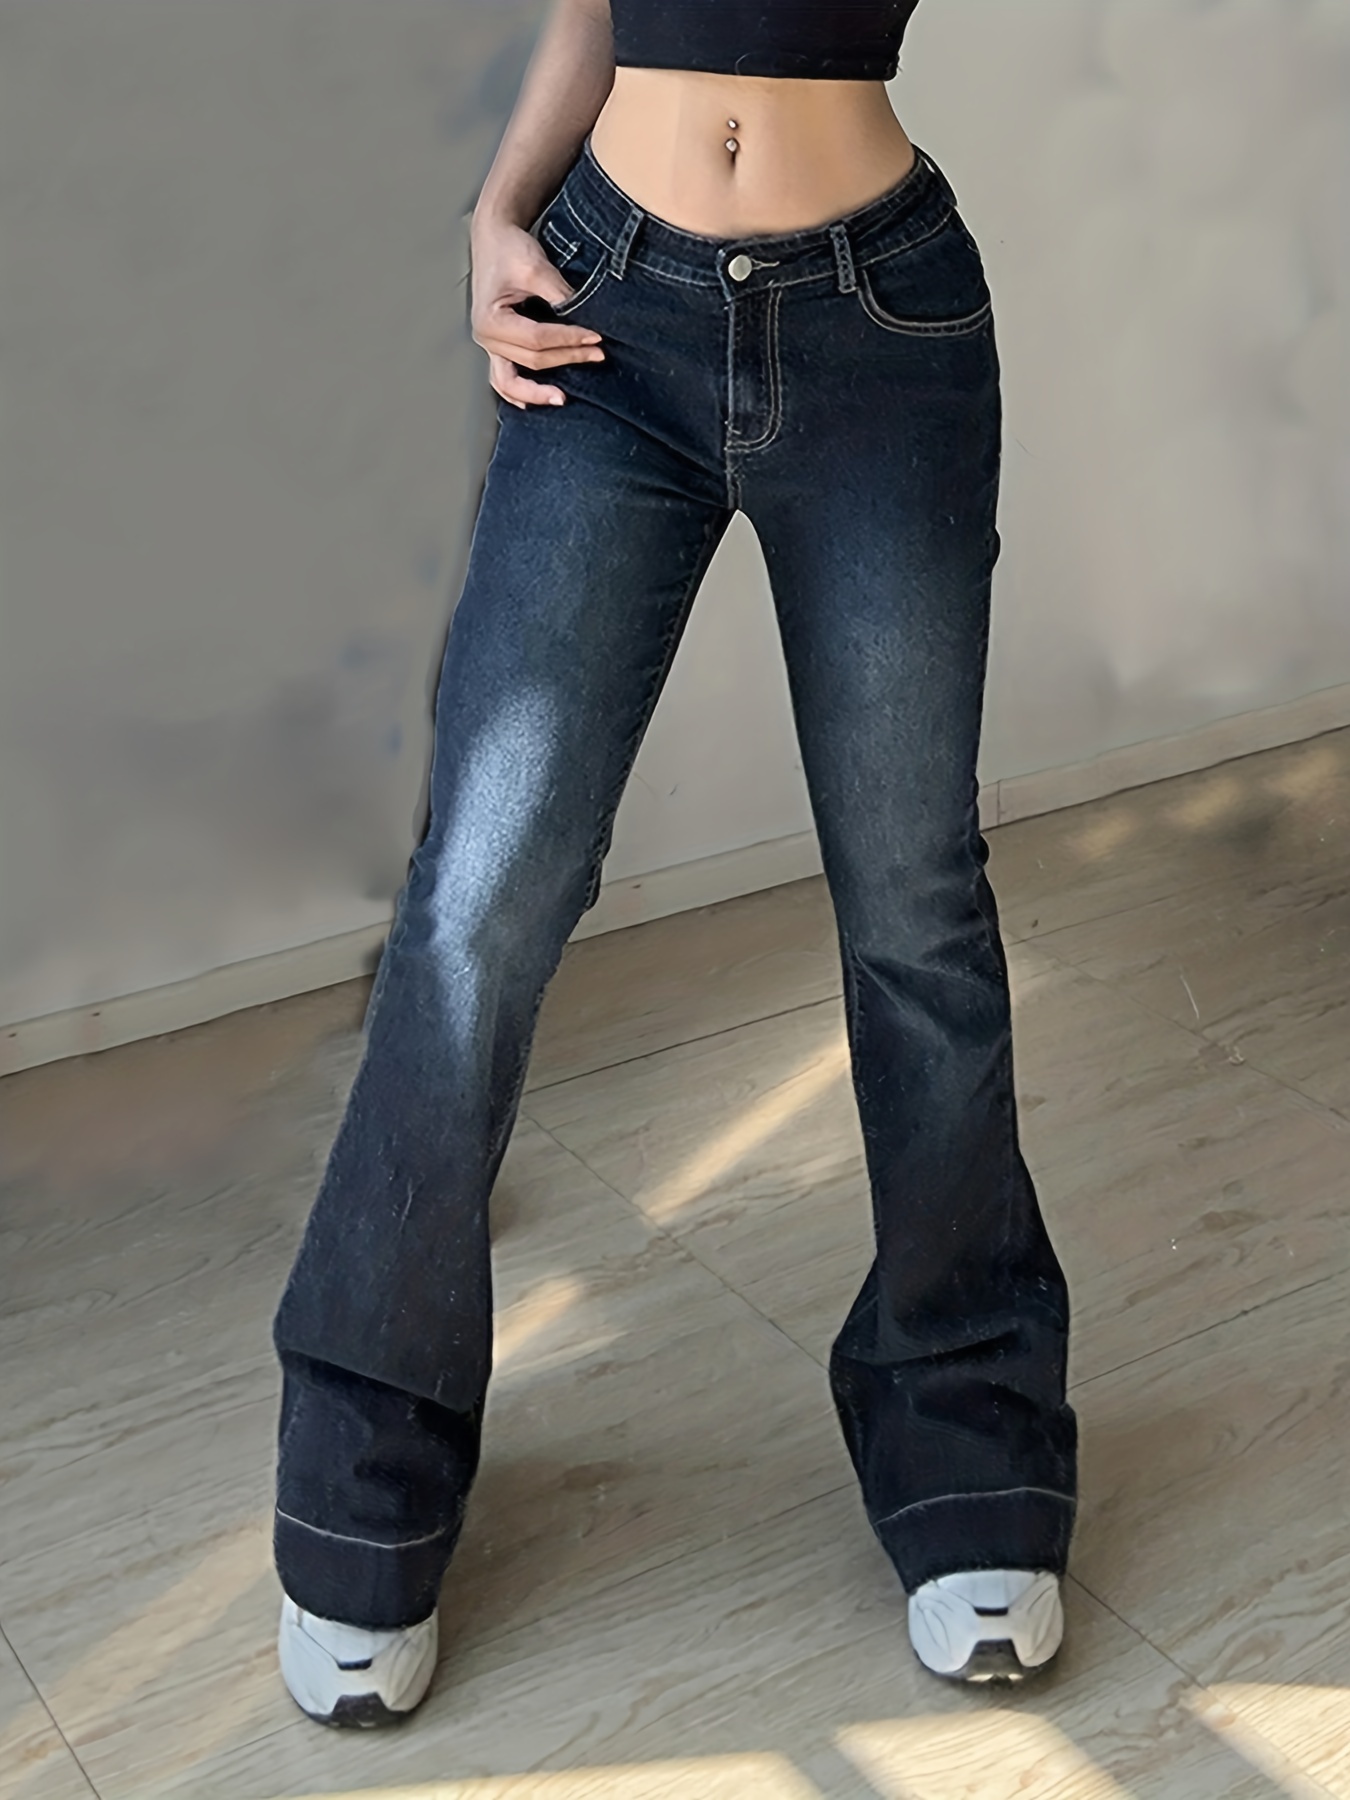 Gibobby Jeans mujer cintura alta Pantalones de pierna ancha